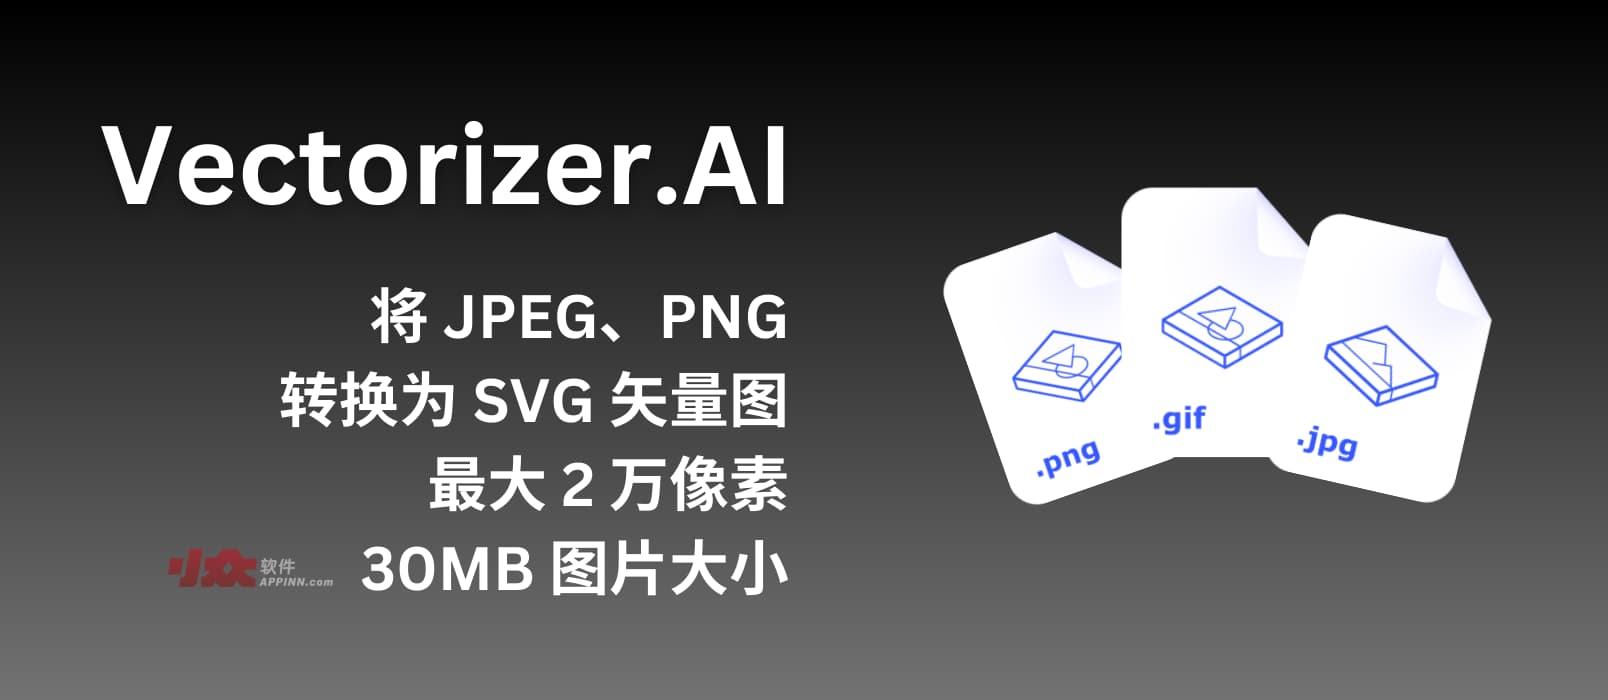 Vectorizer.AI - 将 JPEG 和 PNG 位图转换为 SVG 矢量图，可无限放大。支持最大 2 万像素、30MB 图片大小【已收费】 1